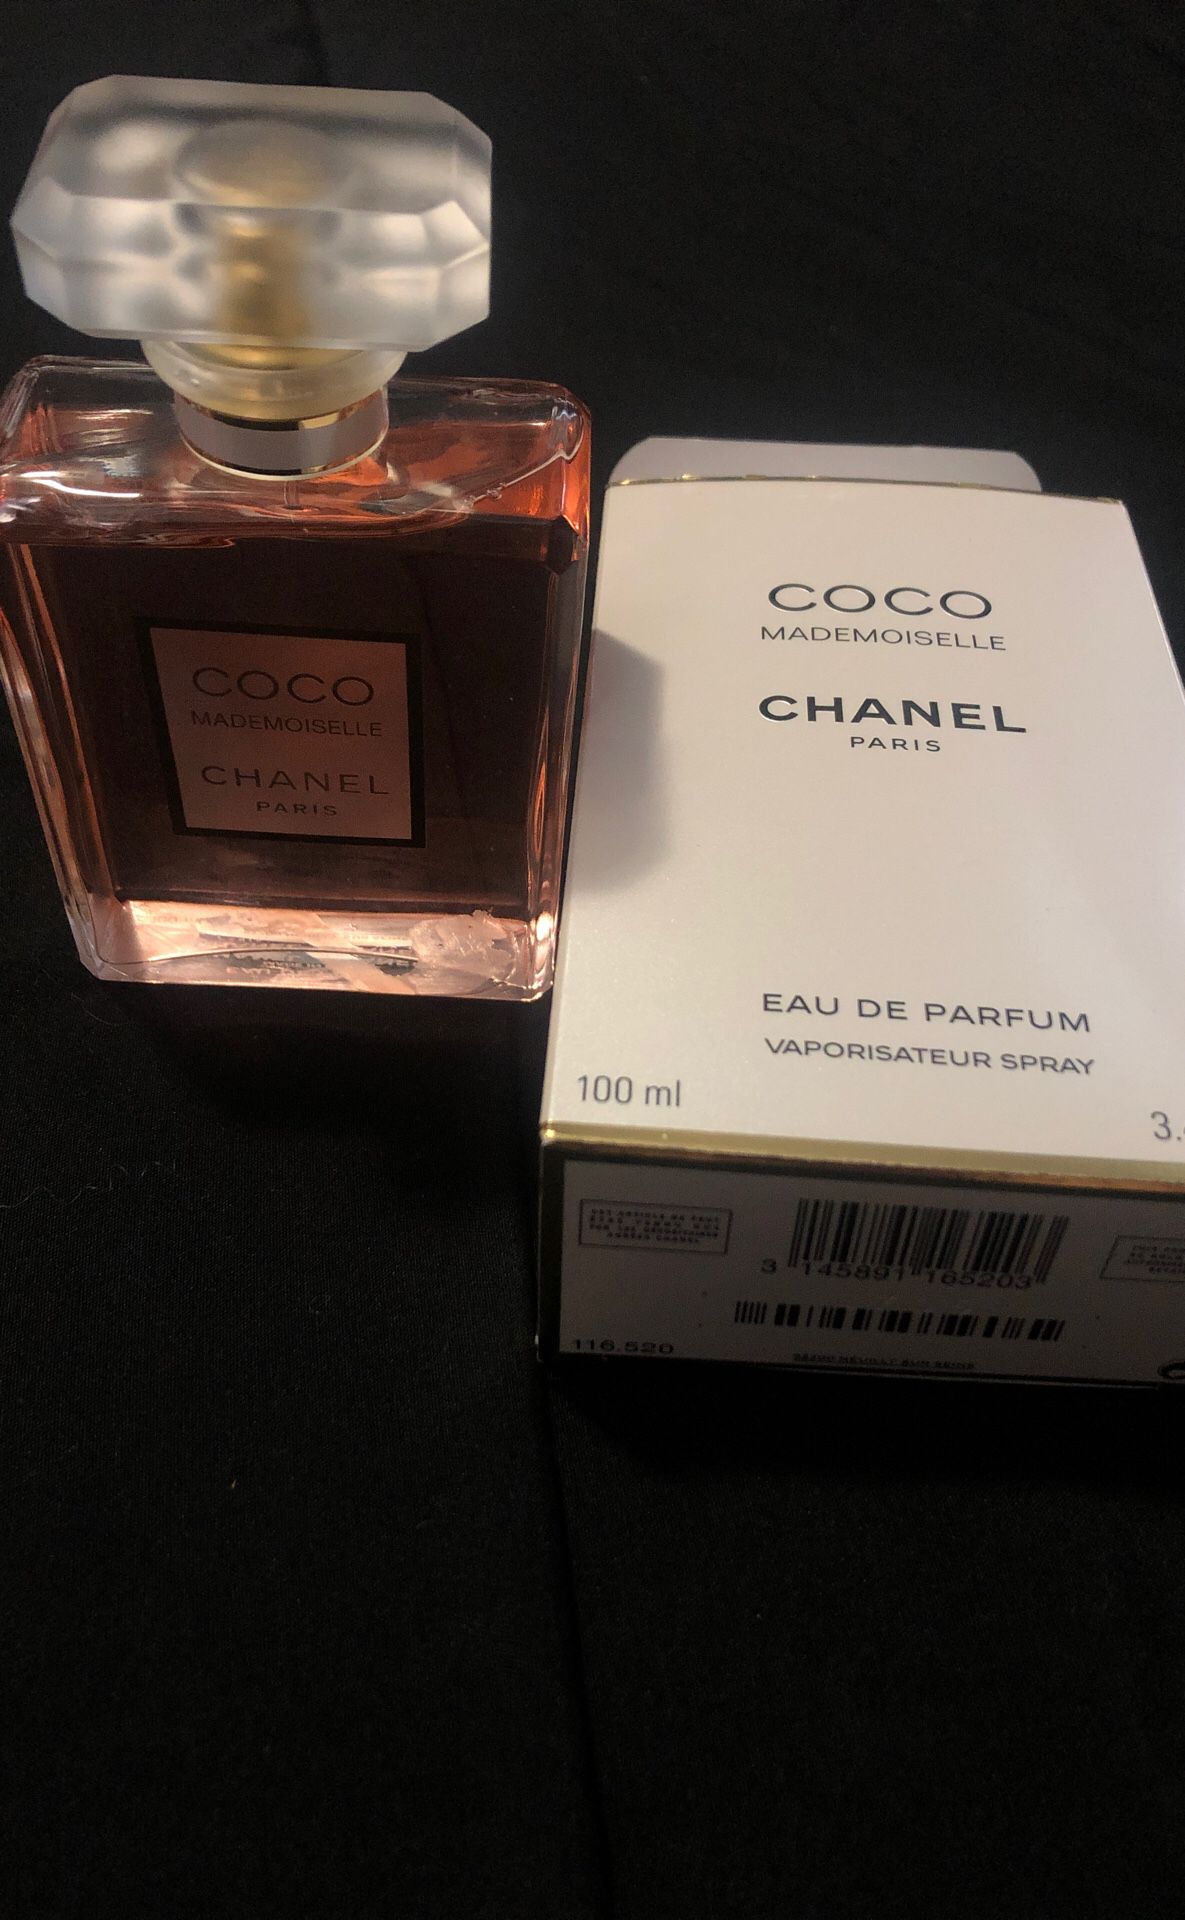 Coco Chanel perfume 100 ml